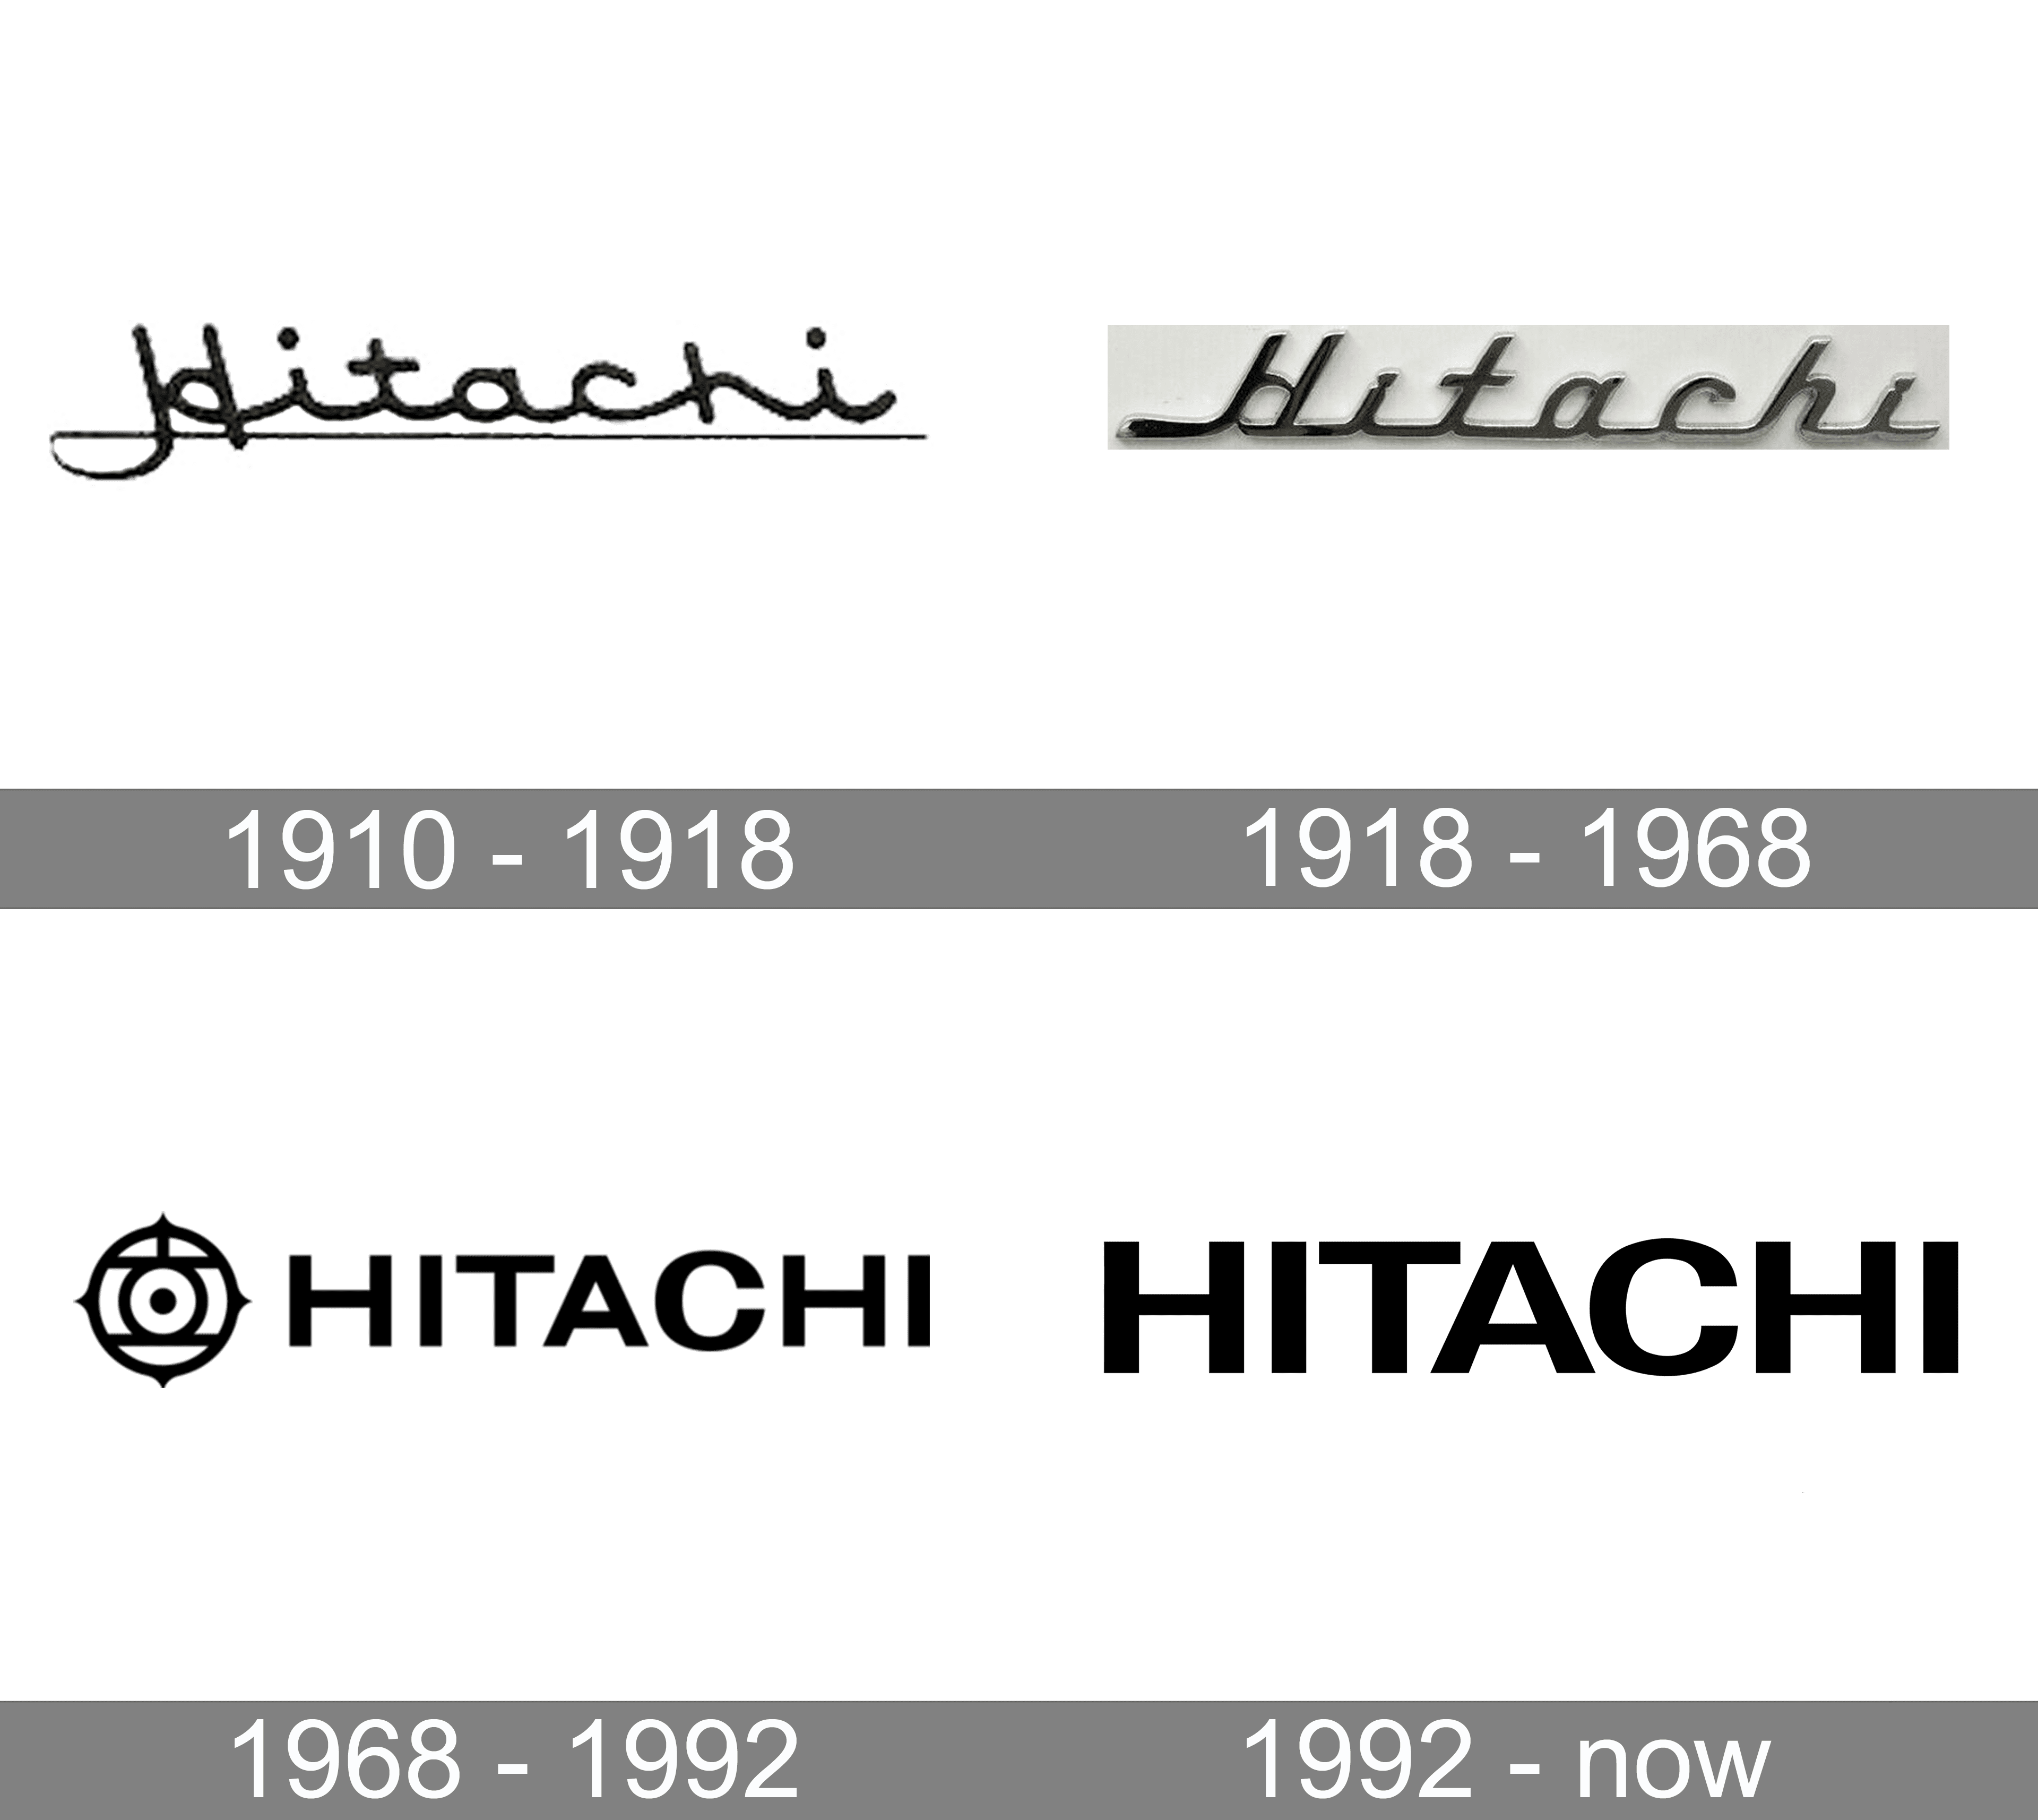 hitachi inspire the next logo png